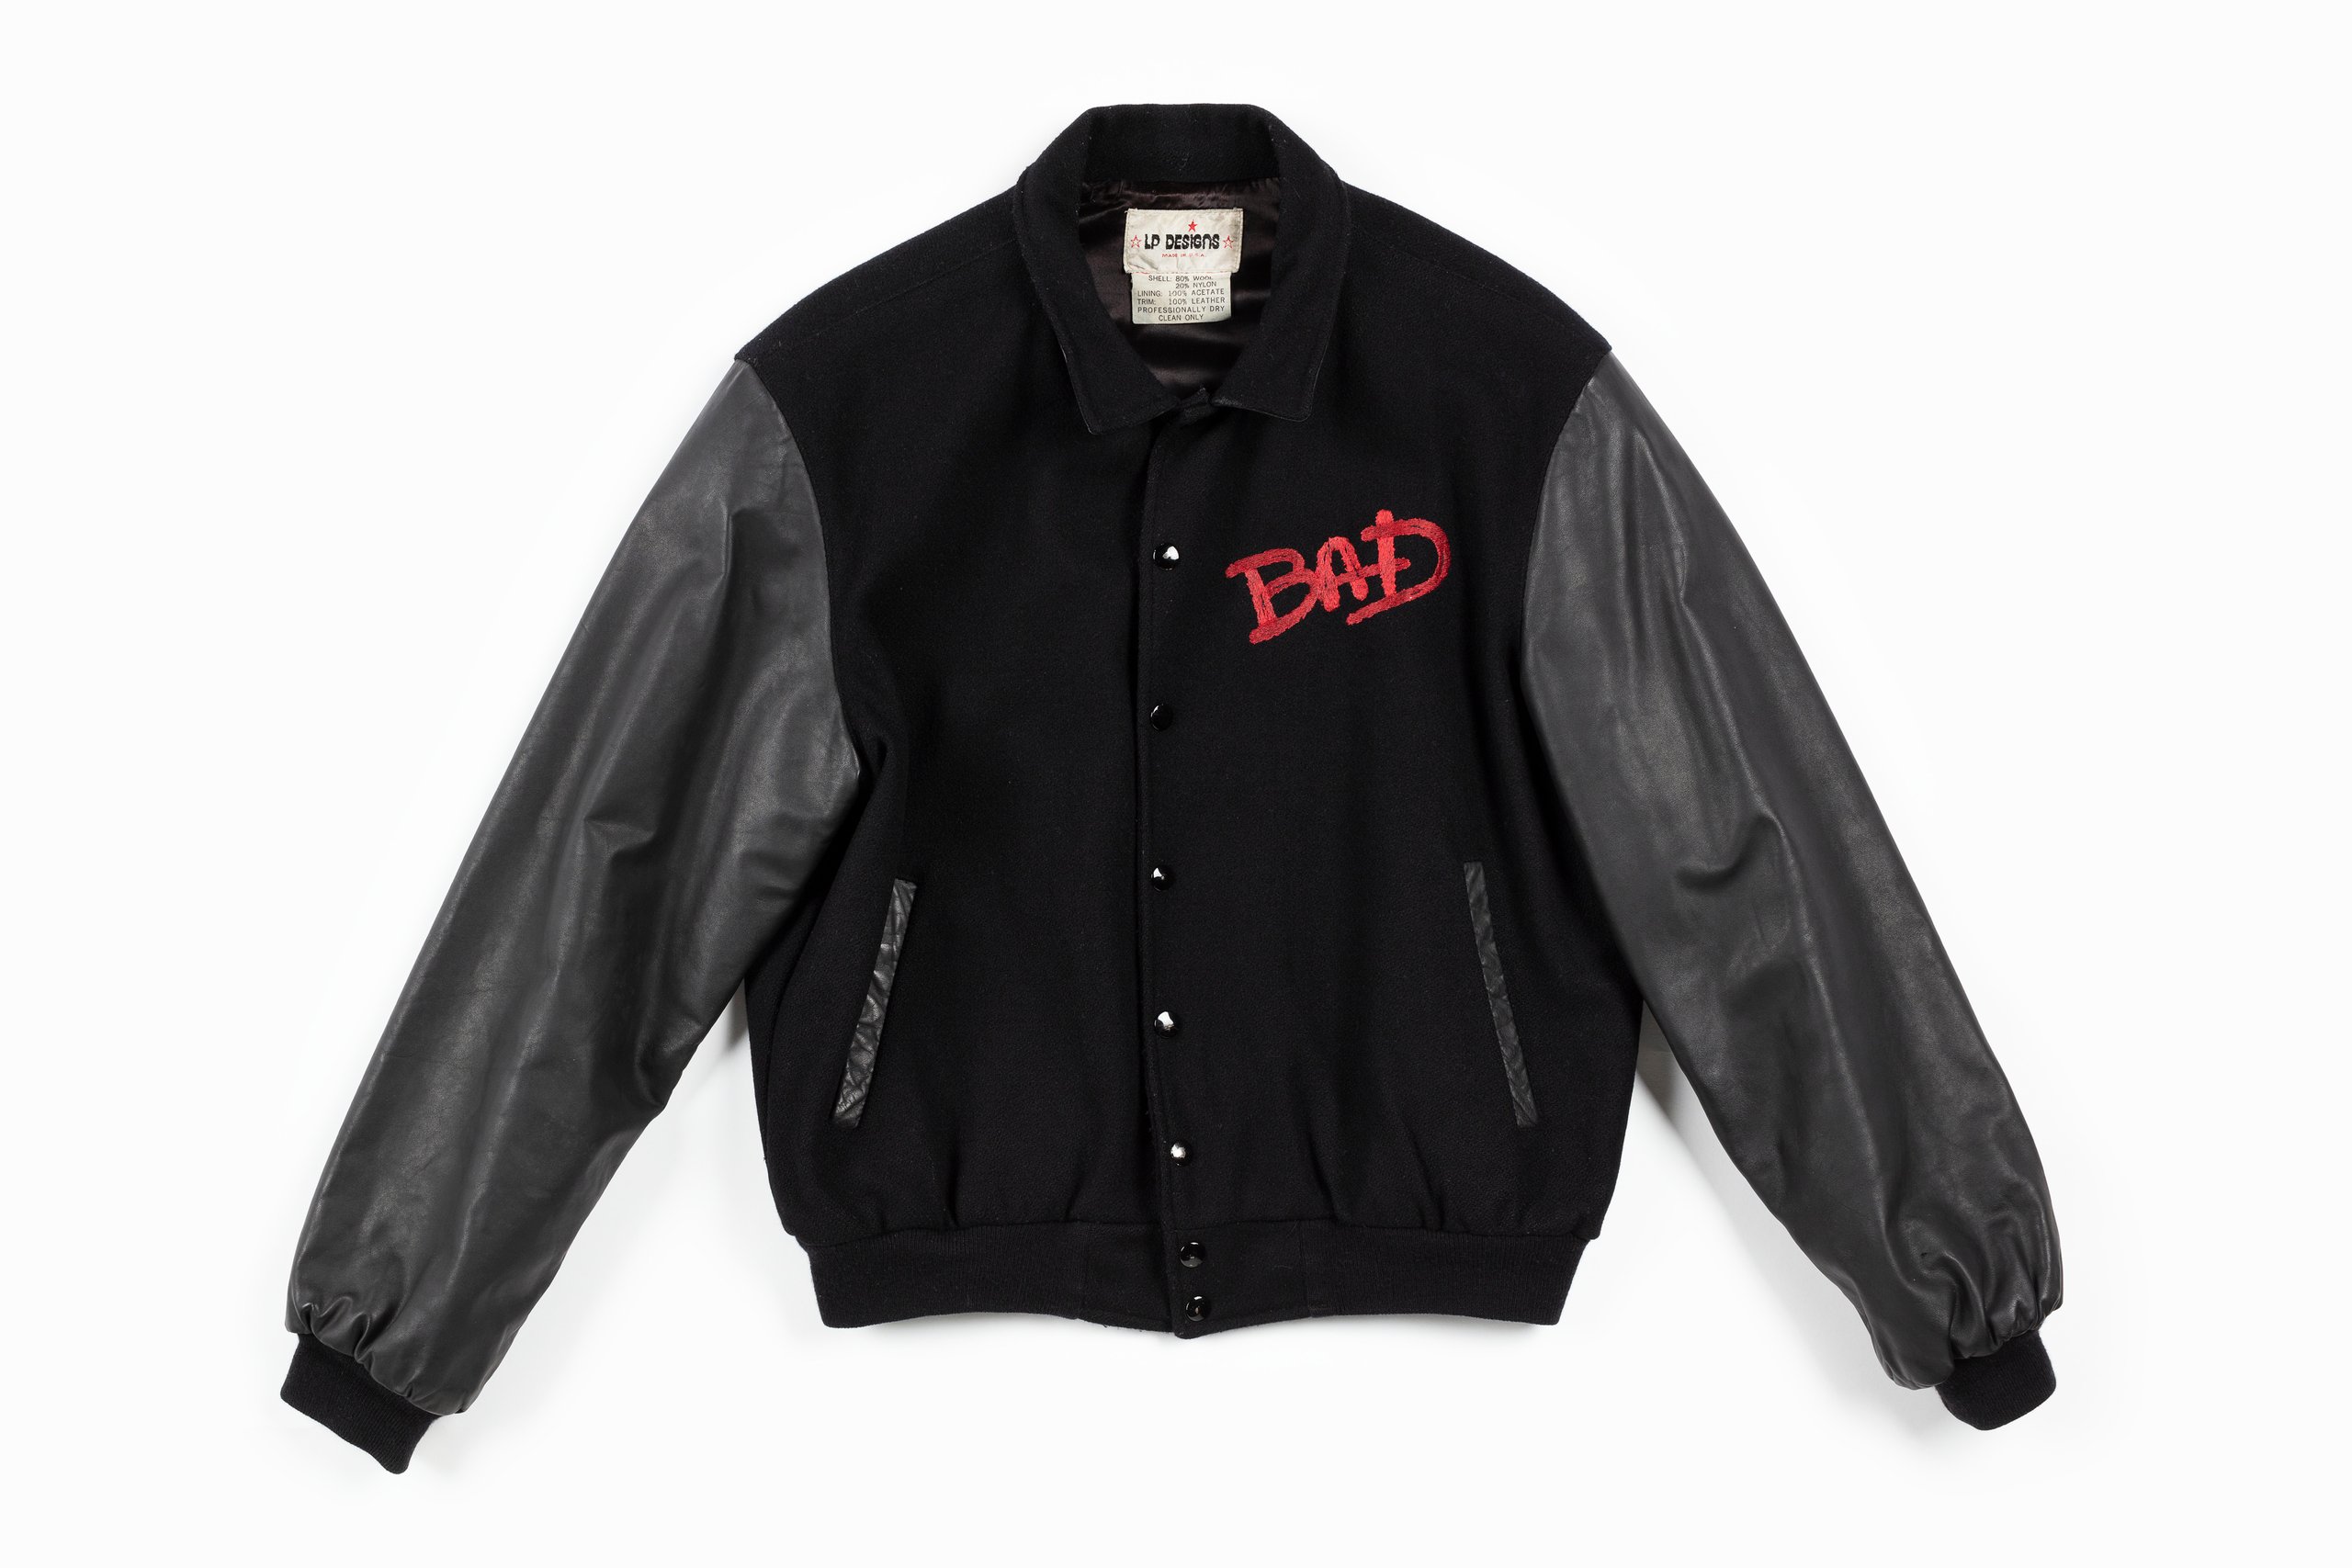 Michael Jackson 'Bad' crew jacket